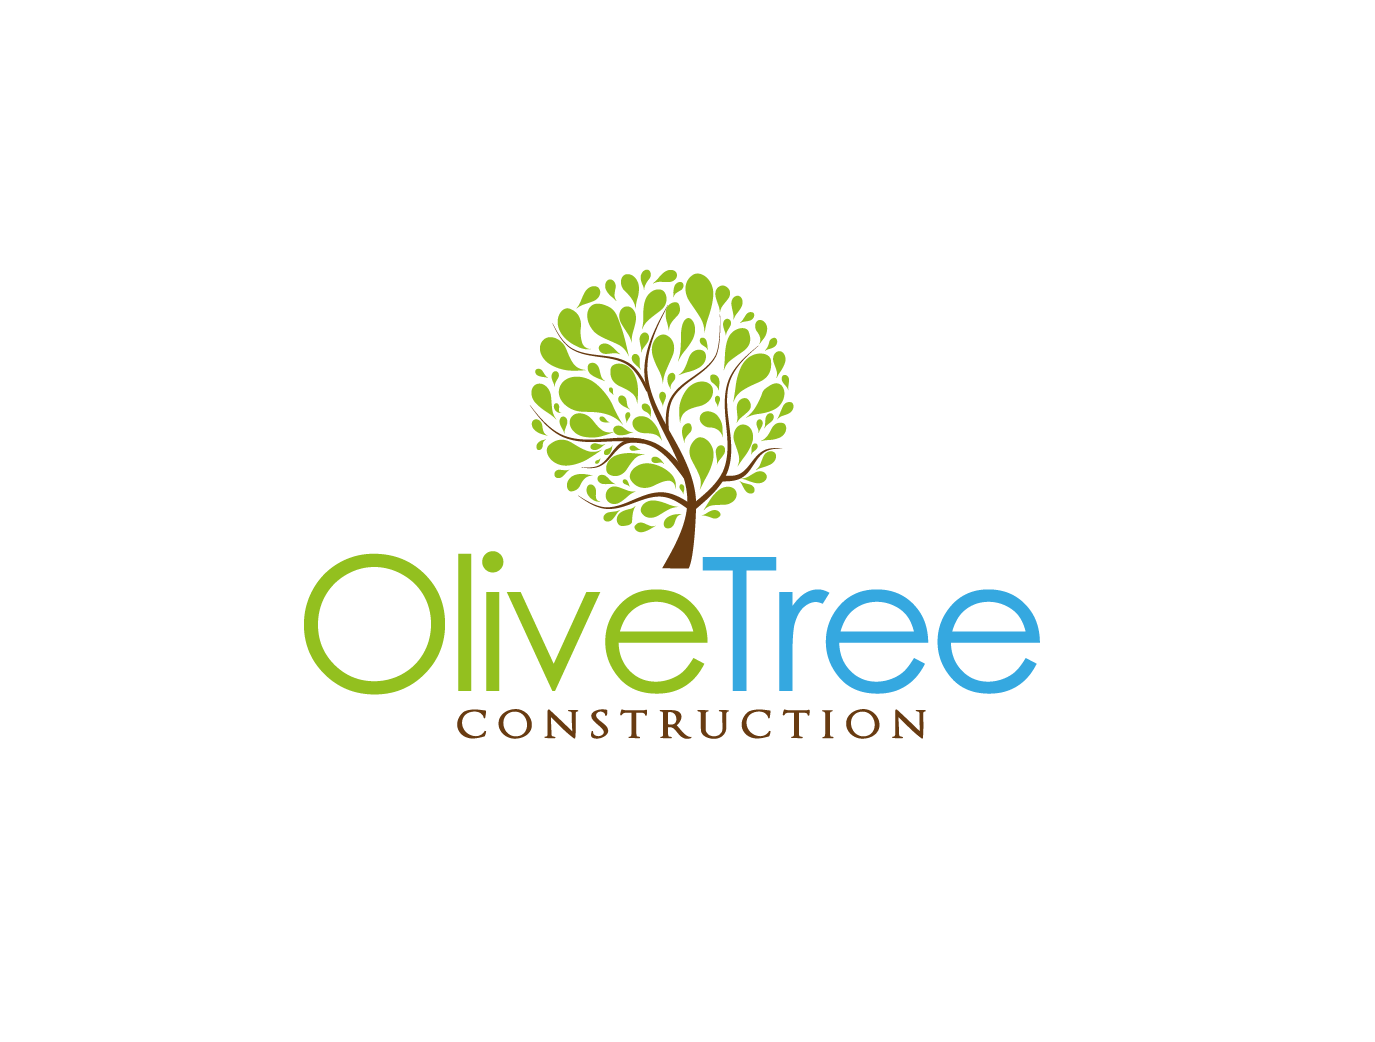 Olive Tree Logo - Modern, Professional, Construction Logo Design for Olive Tree